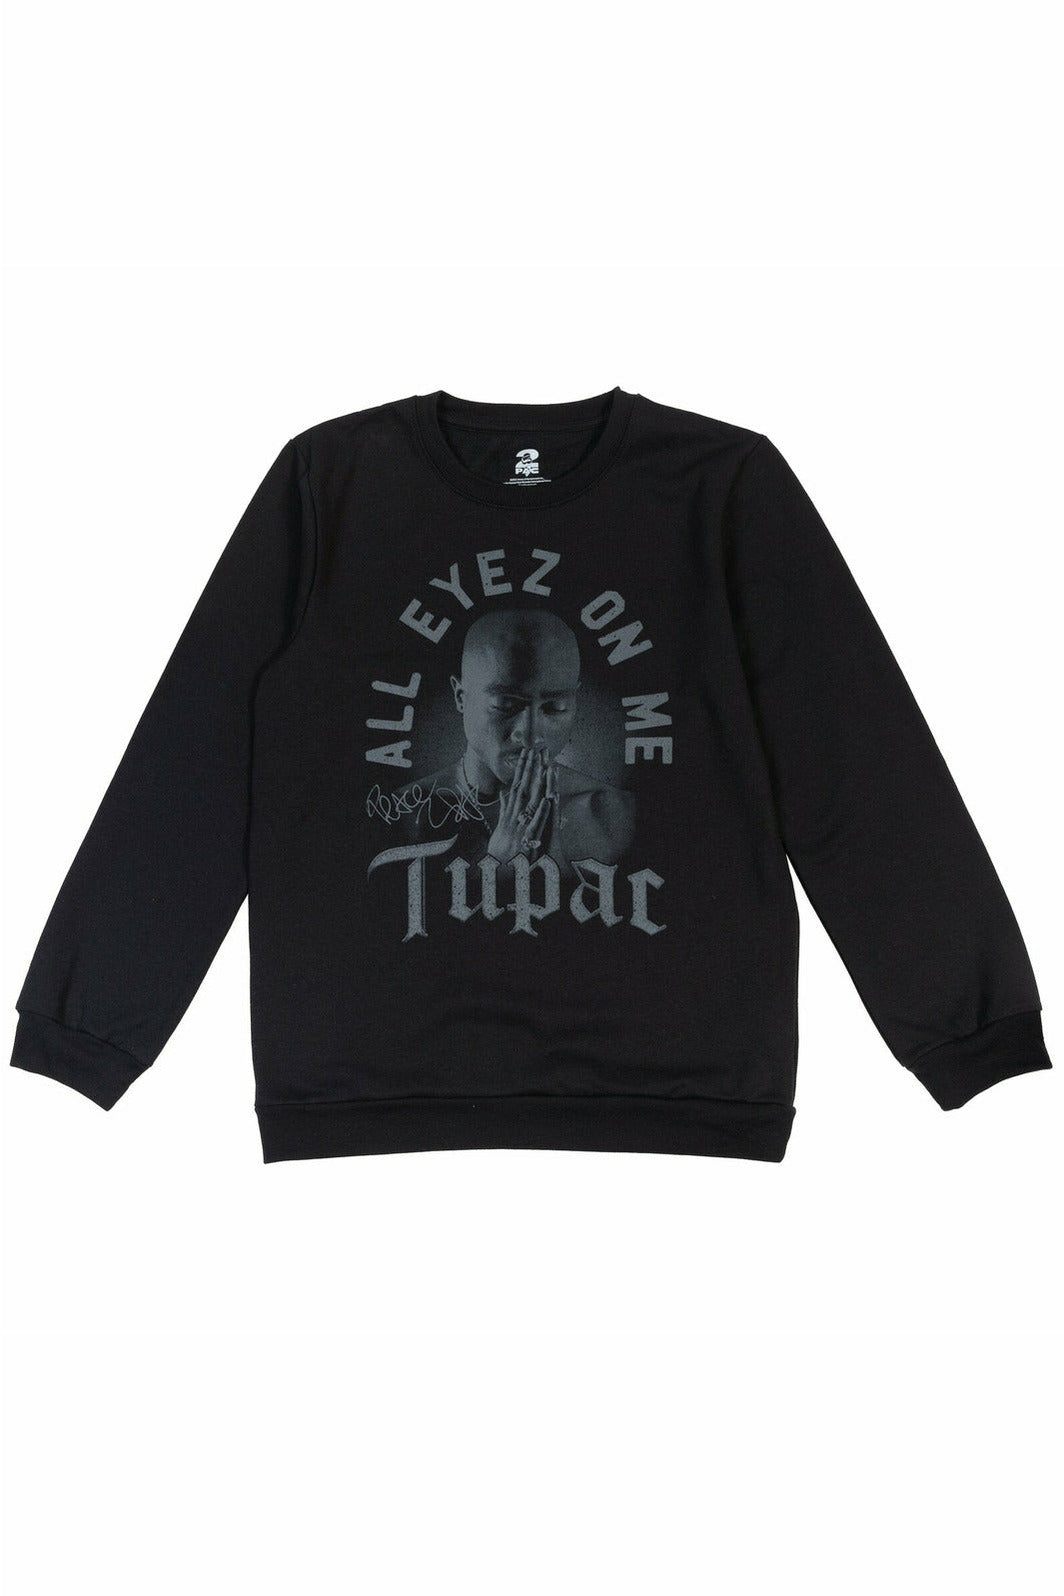 TUPAC SHAKUR Sweatshirt